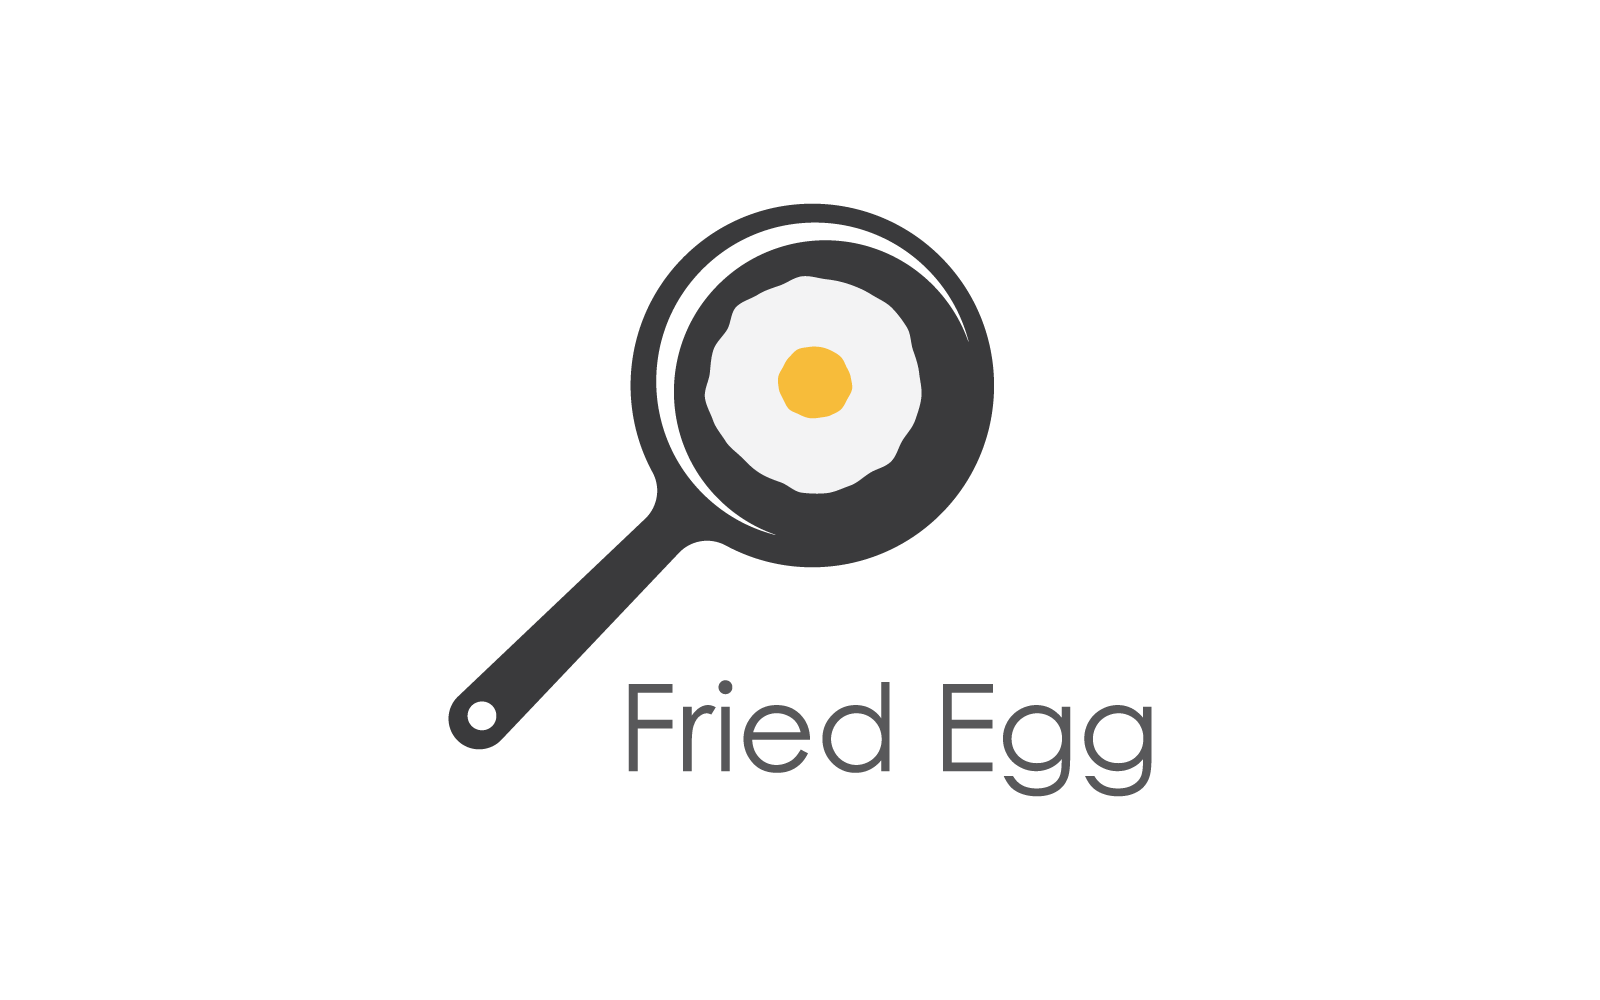 Fried egg illustration logo vector design Logo Template